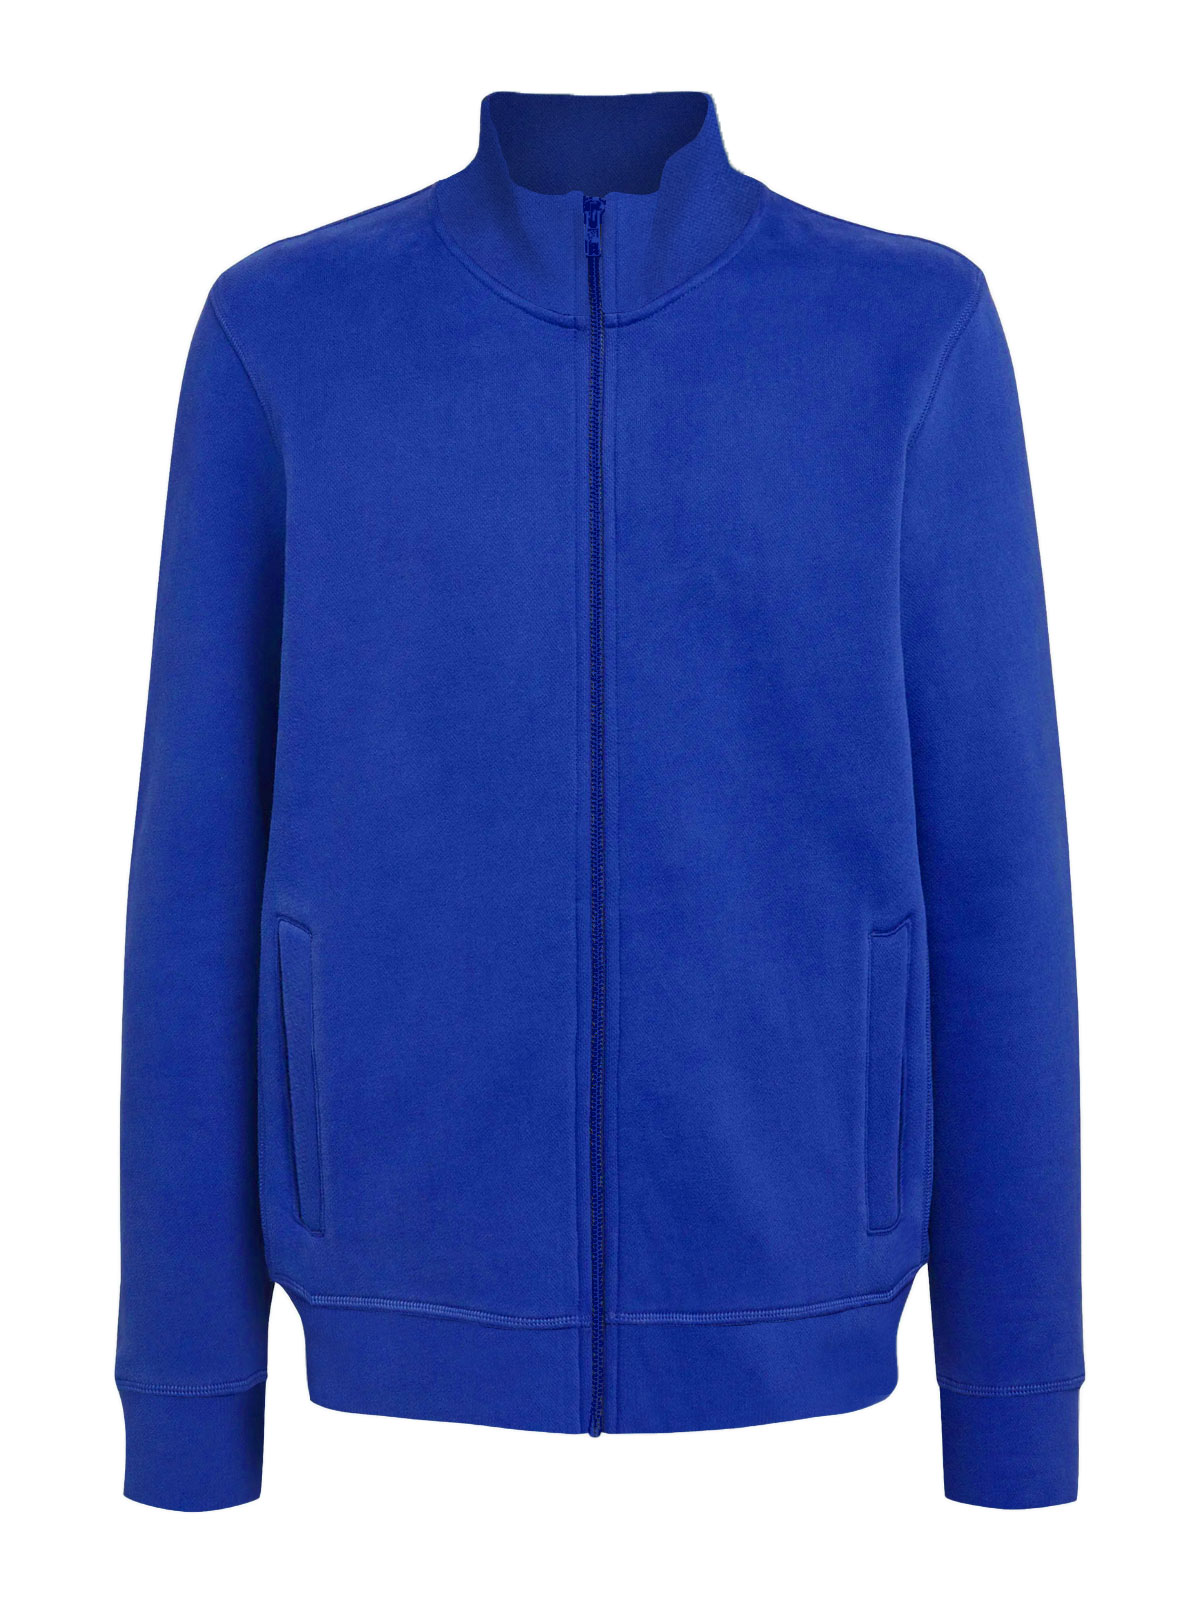 jacket-full-zip-royal-blue.webp